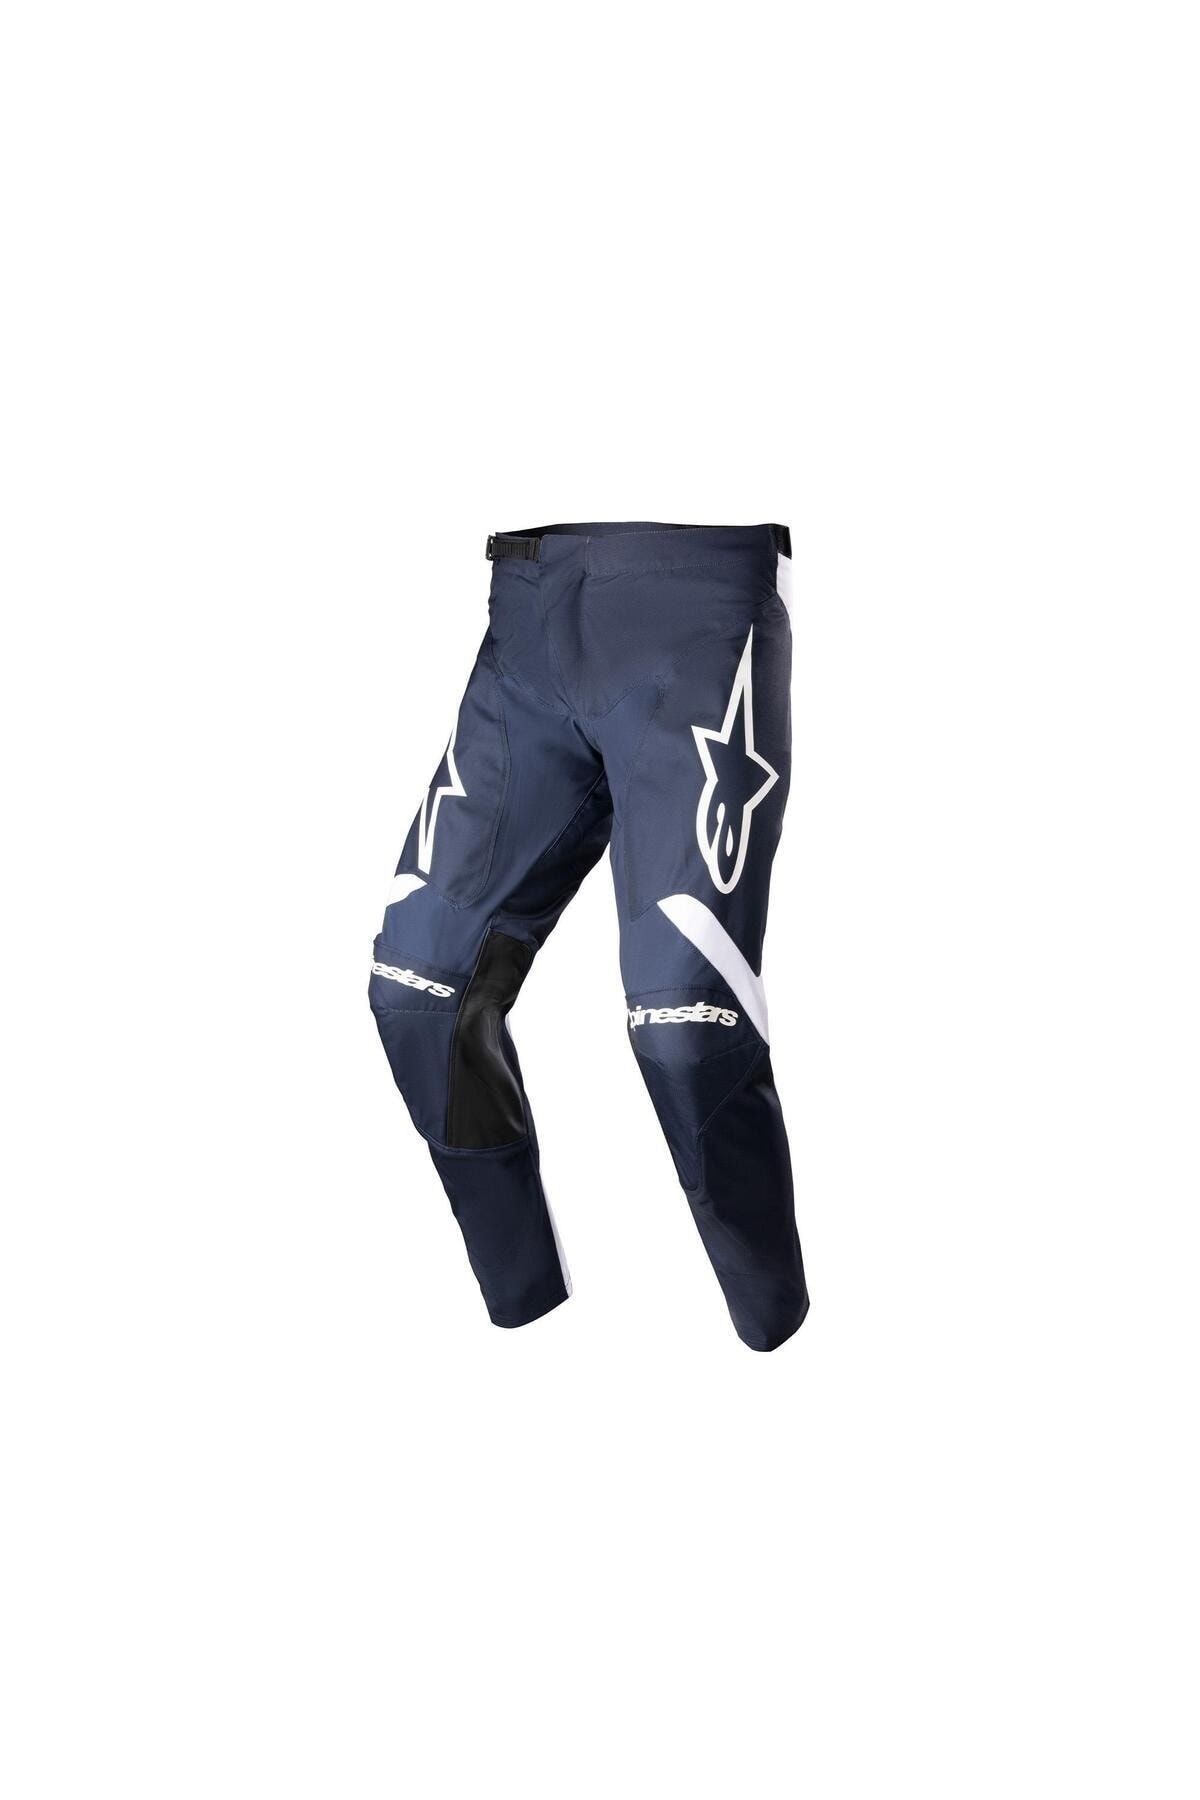 Alpinestars Racer Hoen Kros Motosiklet Pantolonu (Mavi / Beyaz)